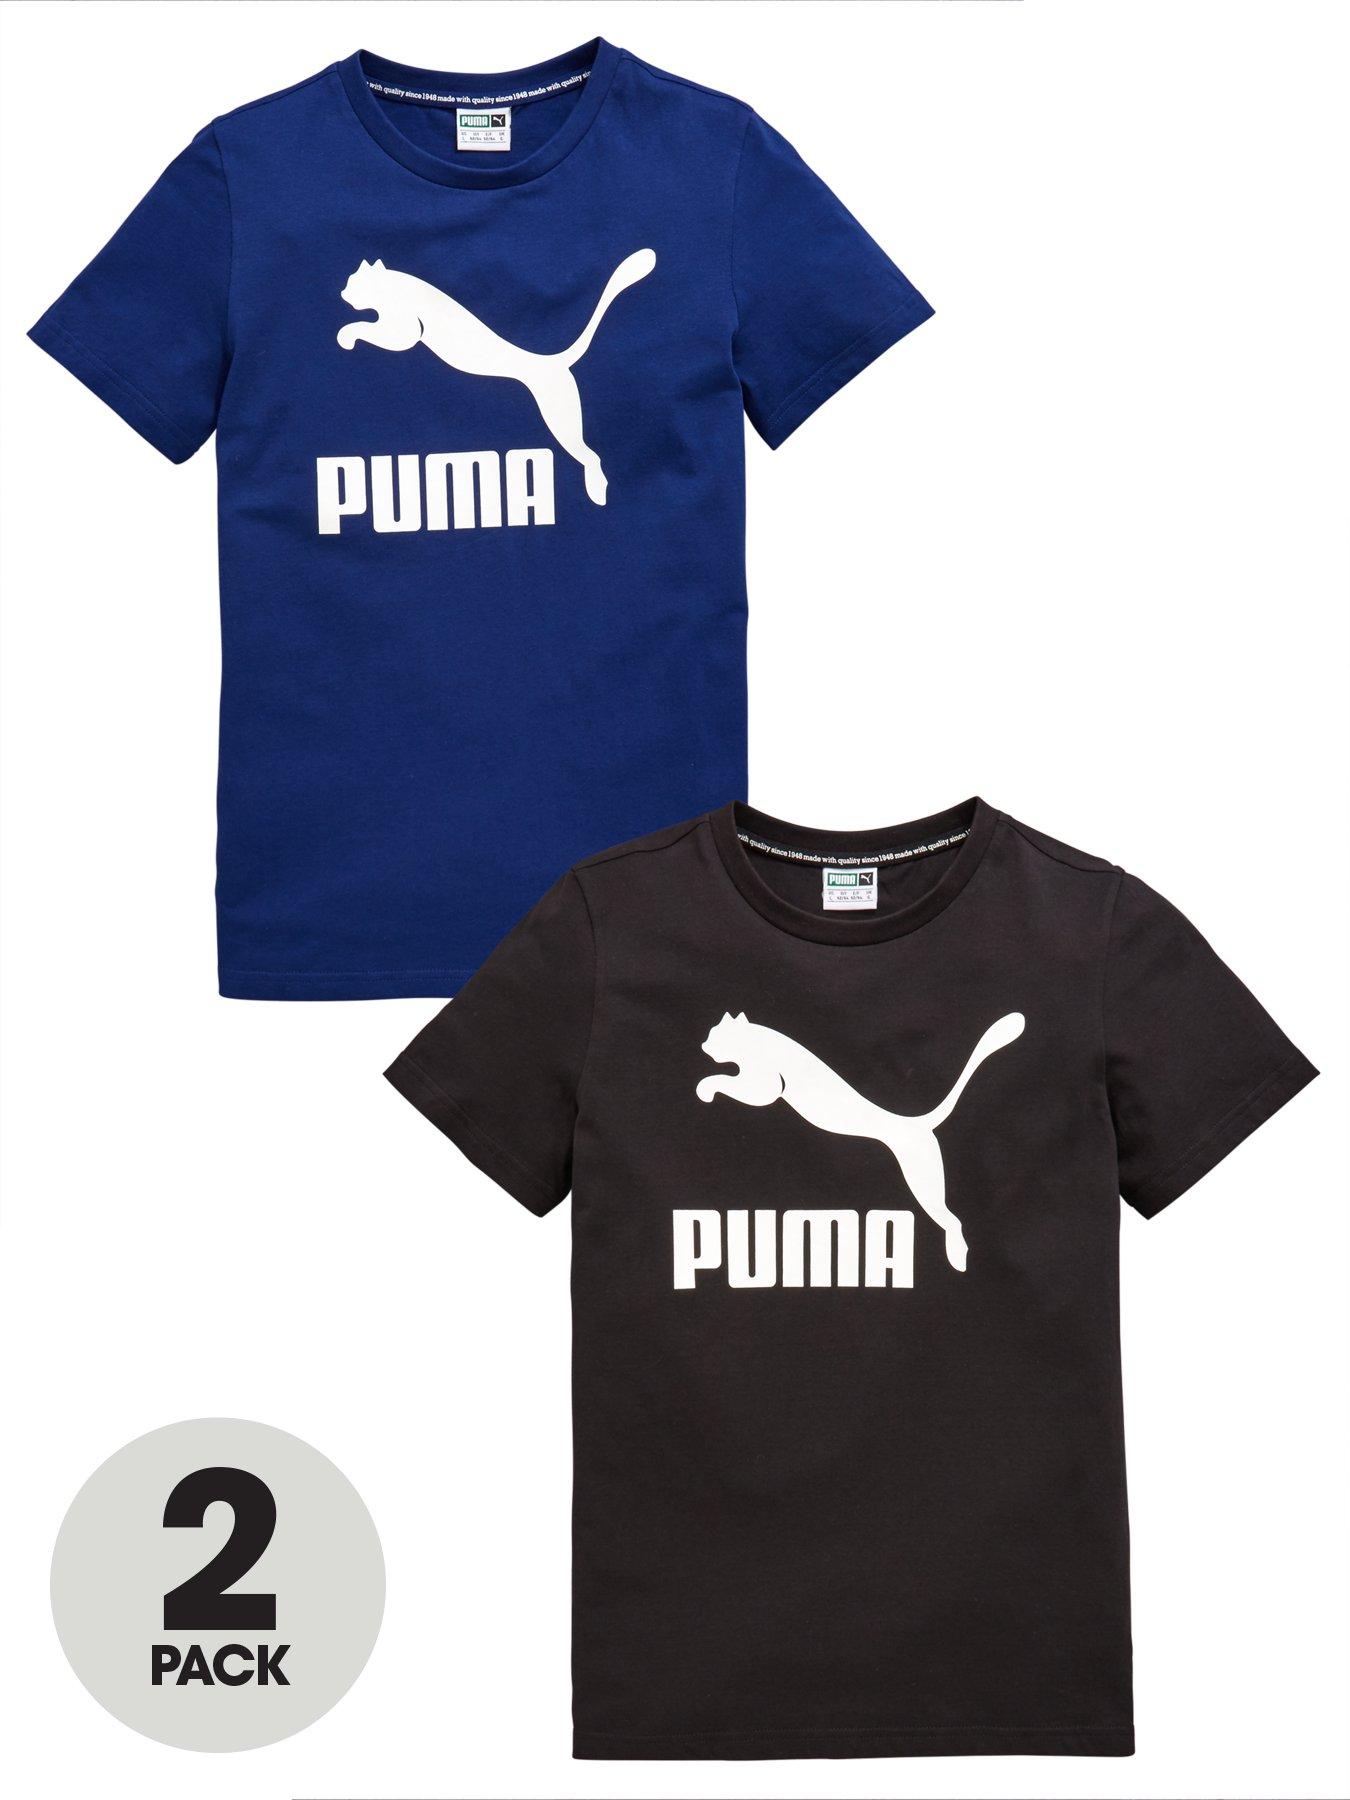 where is puma clothing made